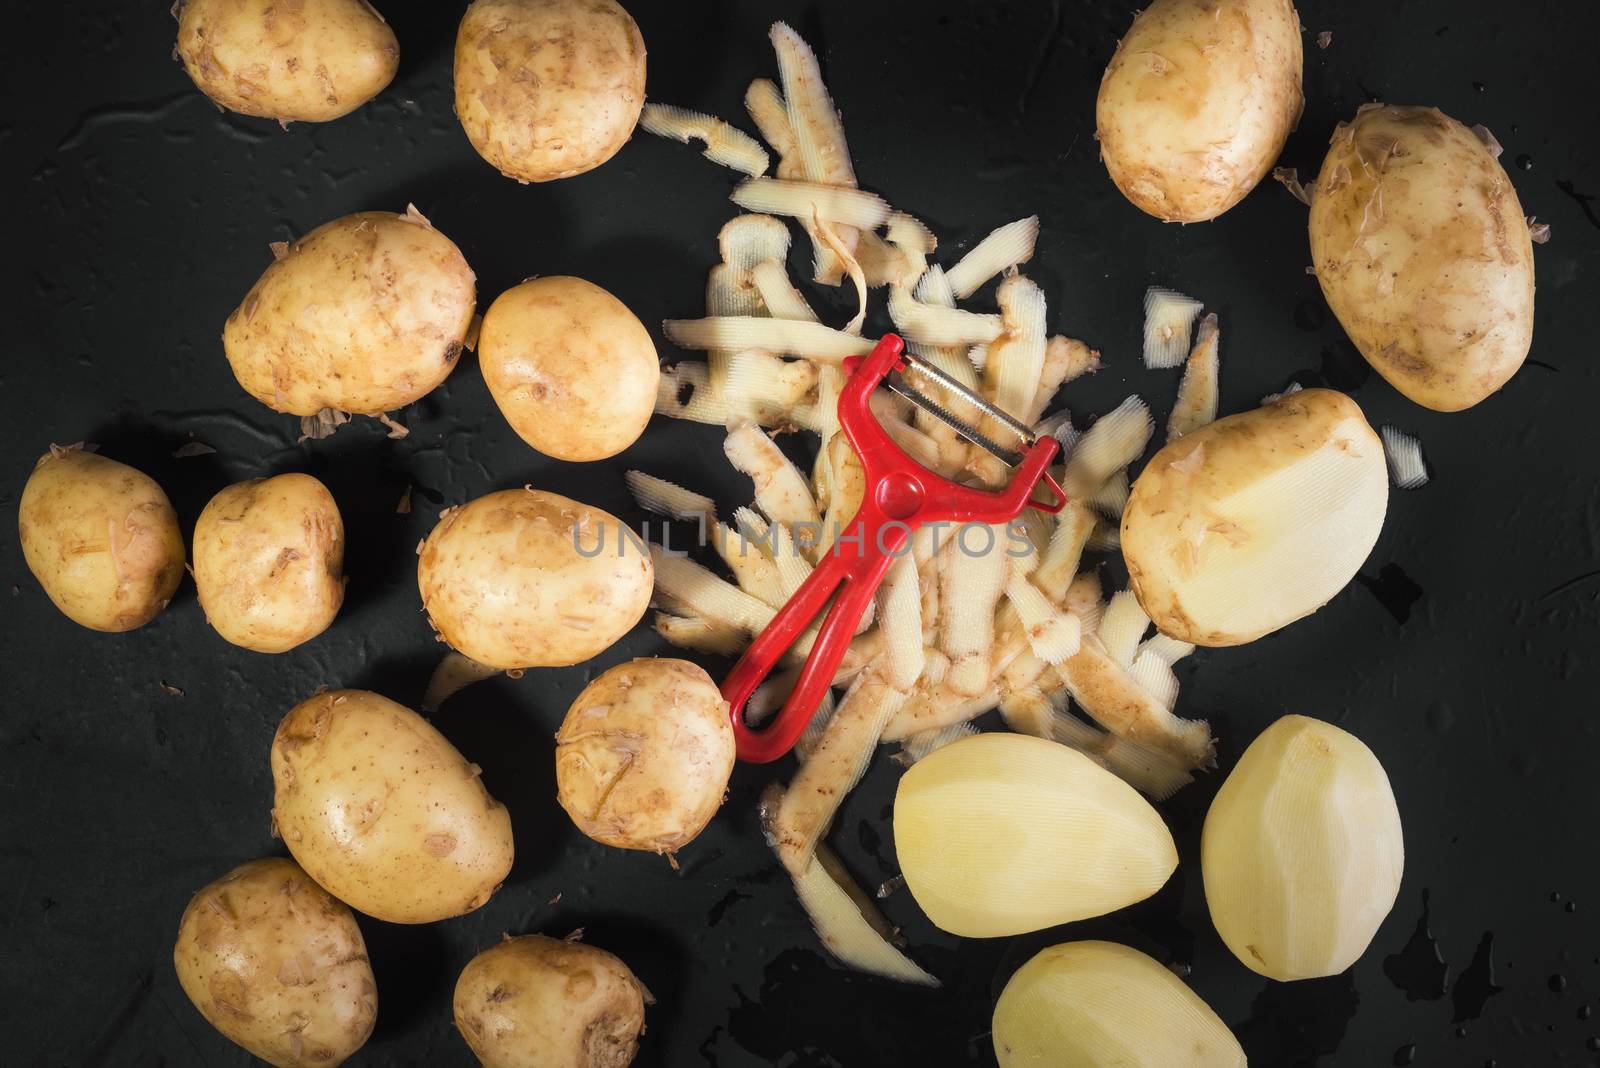 peeled potatoes, Vegetable peeler, raw potatoes and potato peels on black background, cooking potatoes